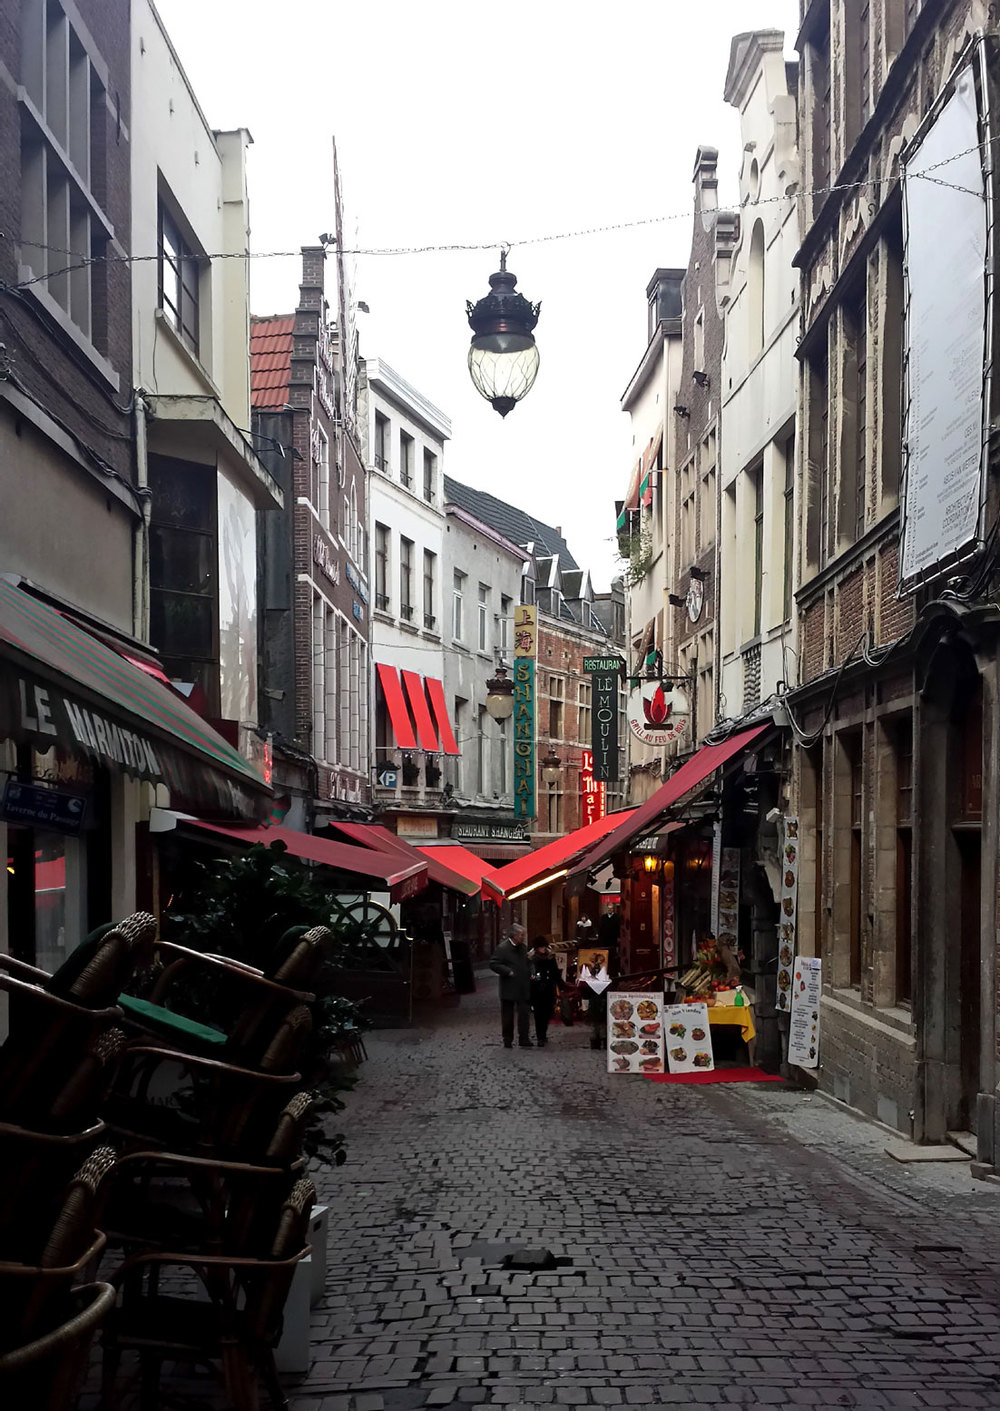  Brussels' side streets 